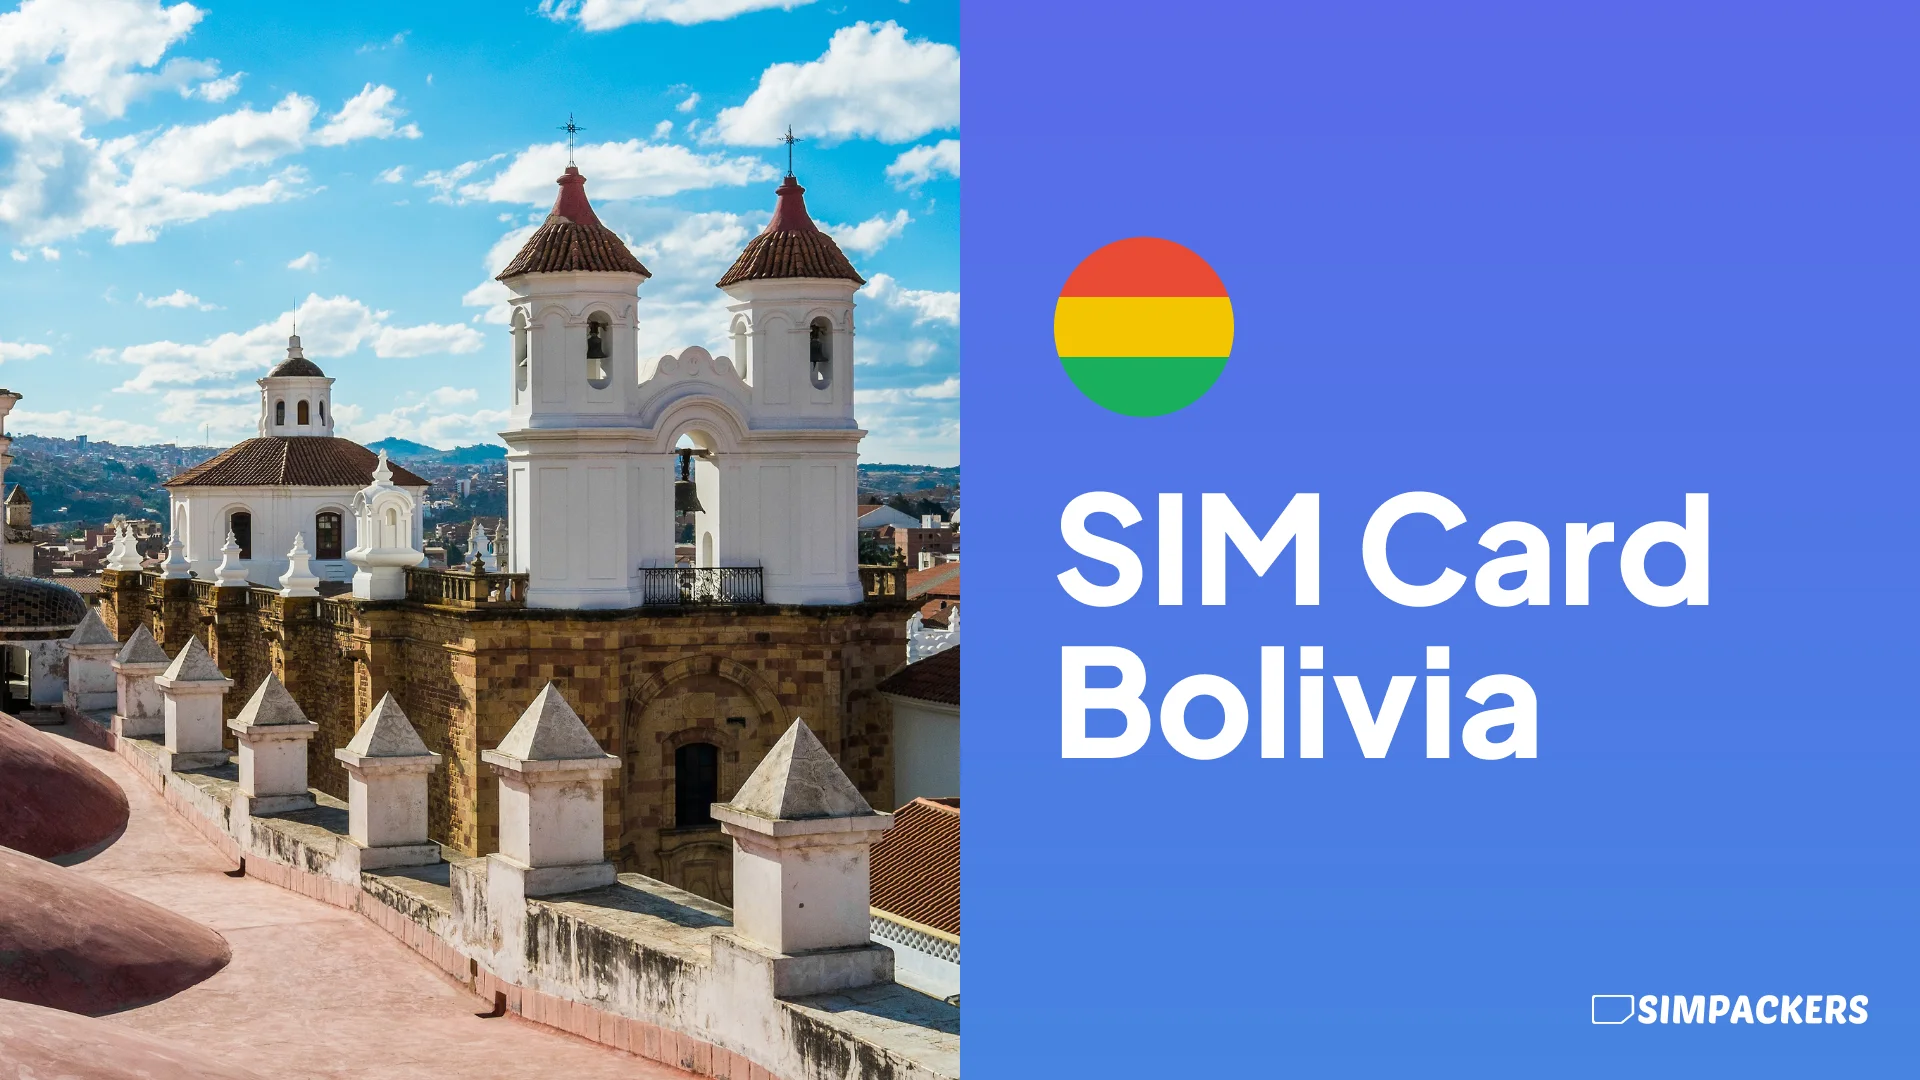 EN/FEATURED_IMAGES/sim-card-bolivia.webp